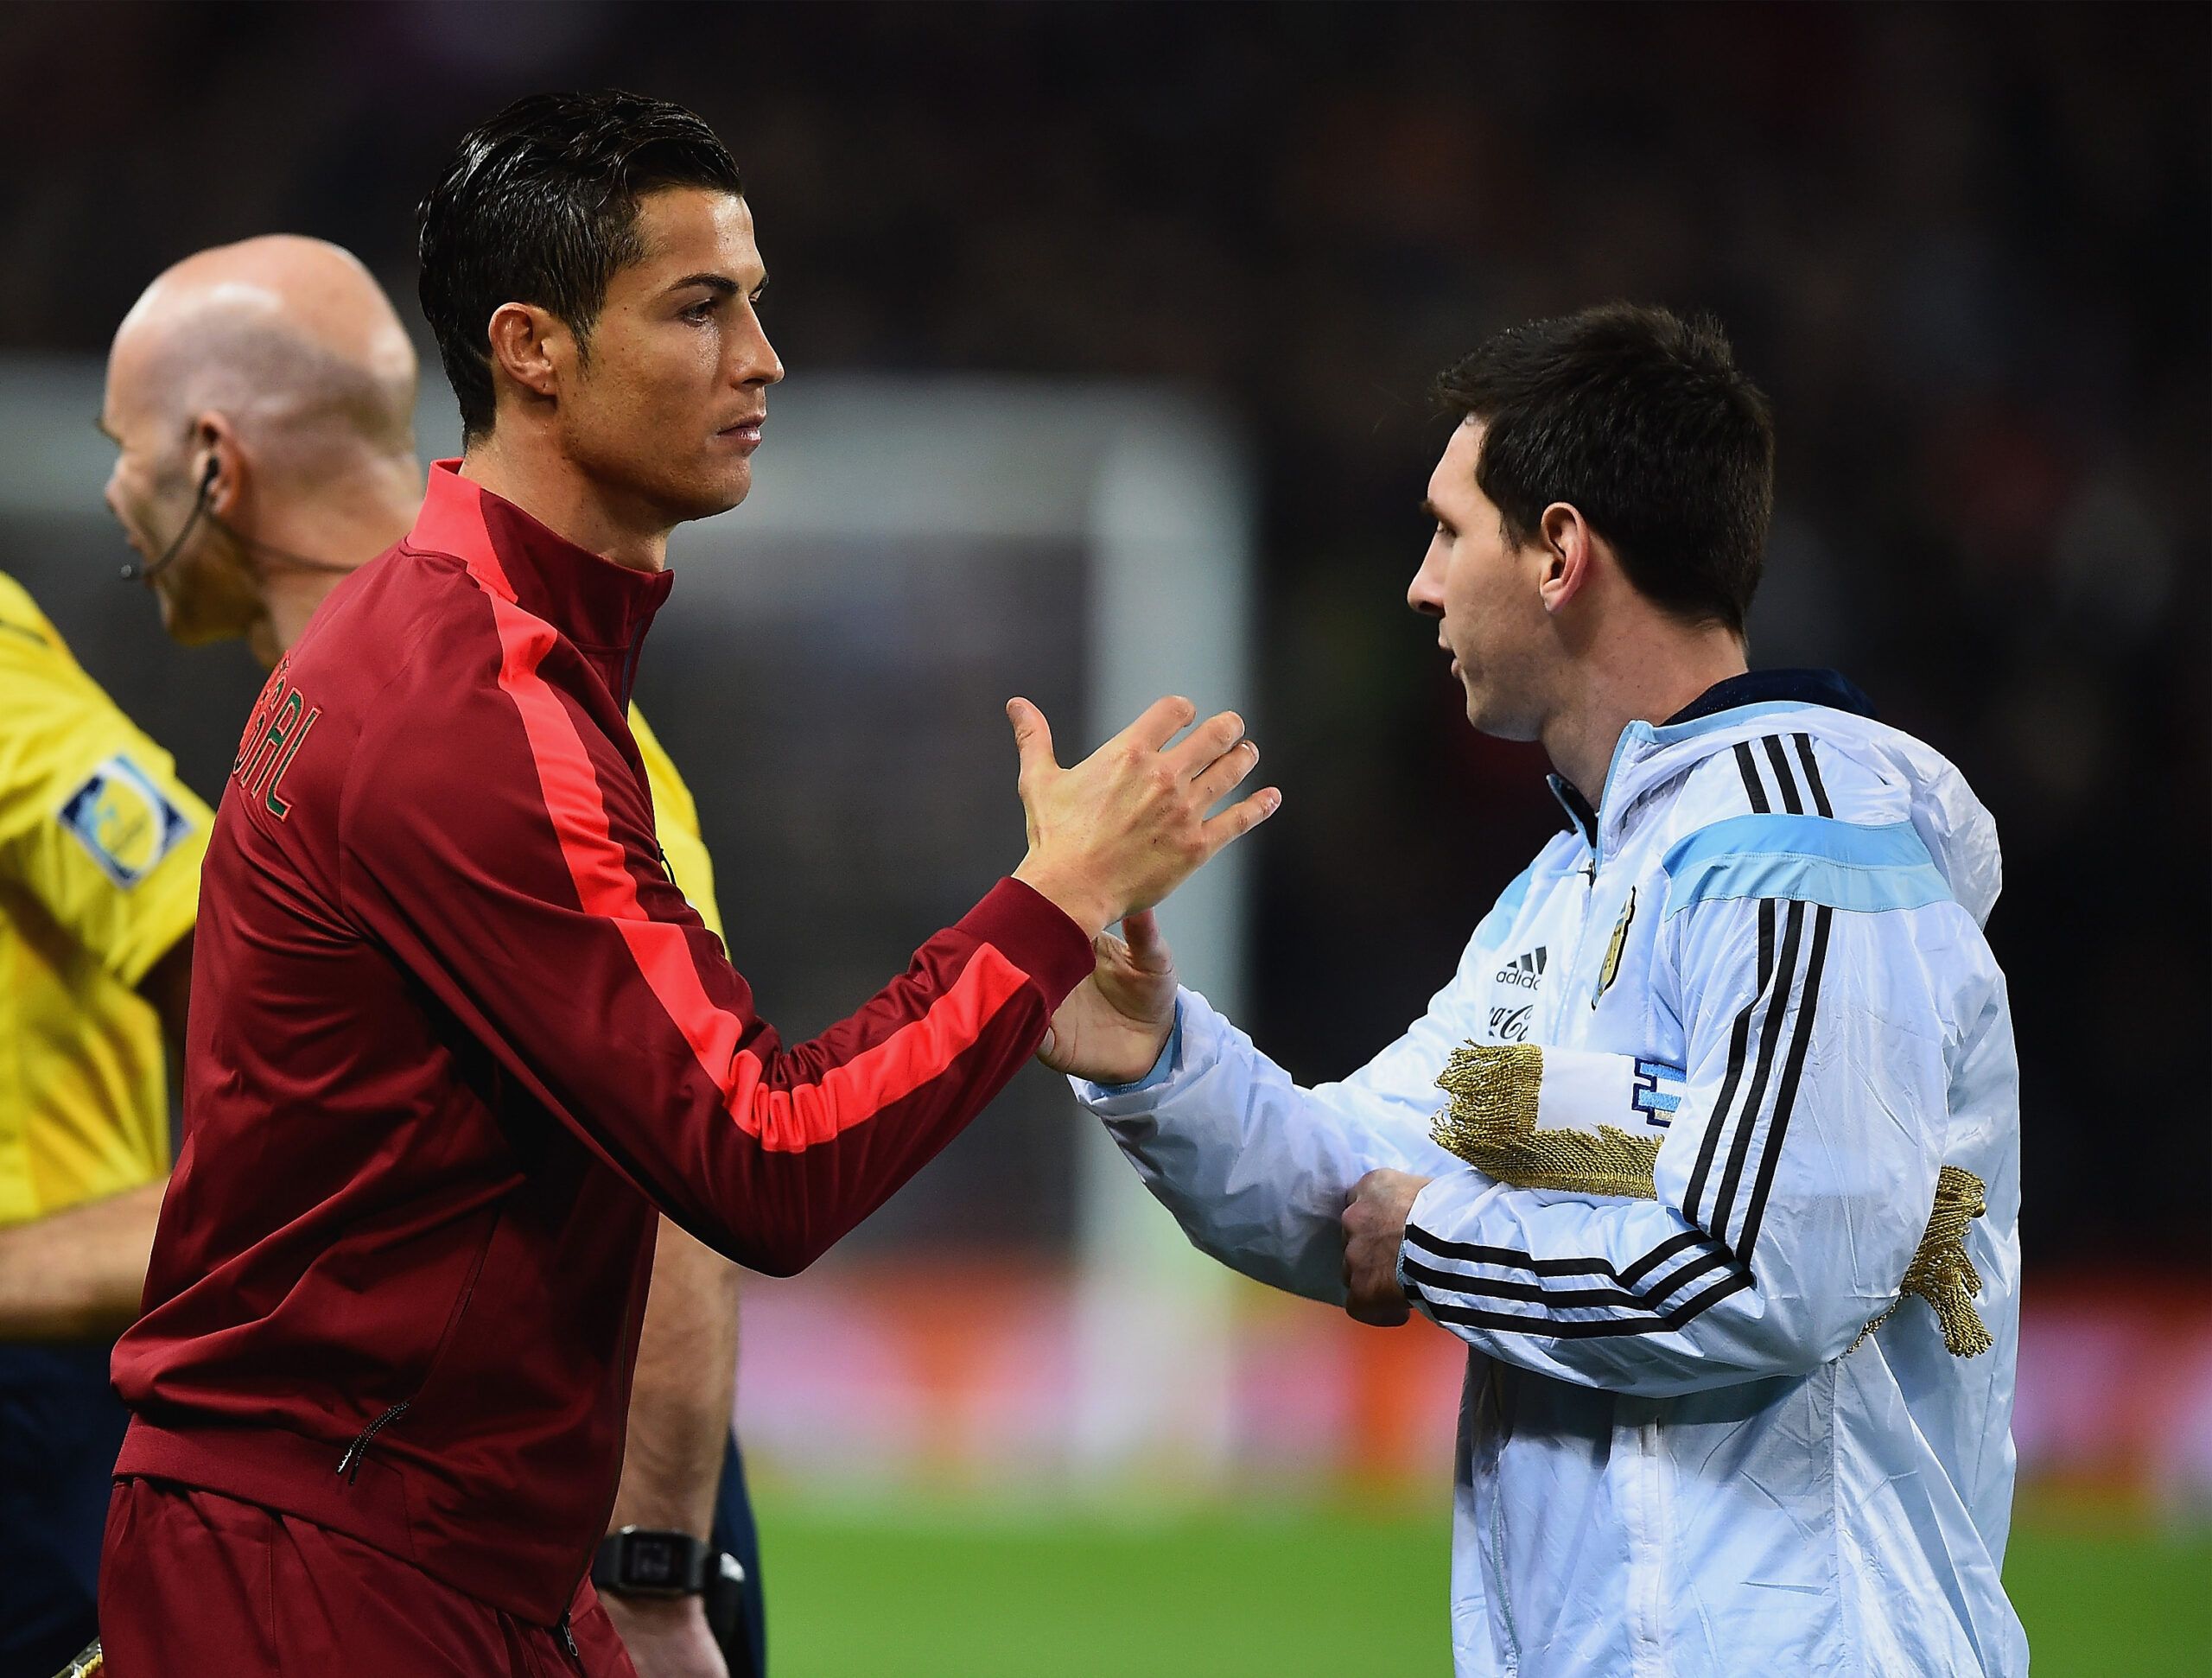 Who is the best footballer ever? Pele, Maradona, Messi or Ronaldo?